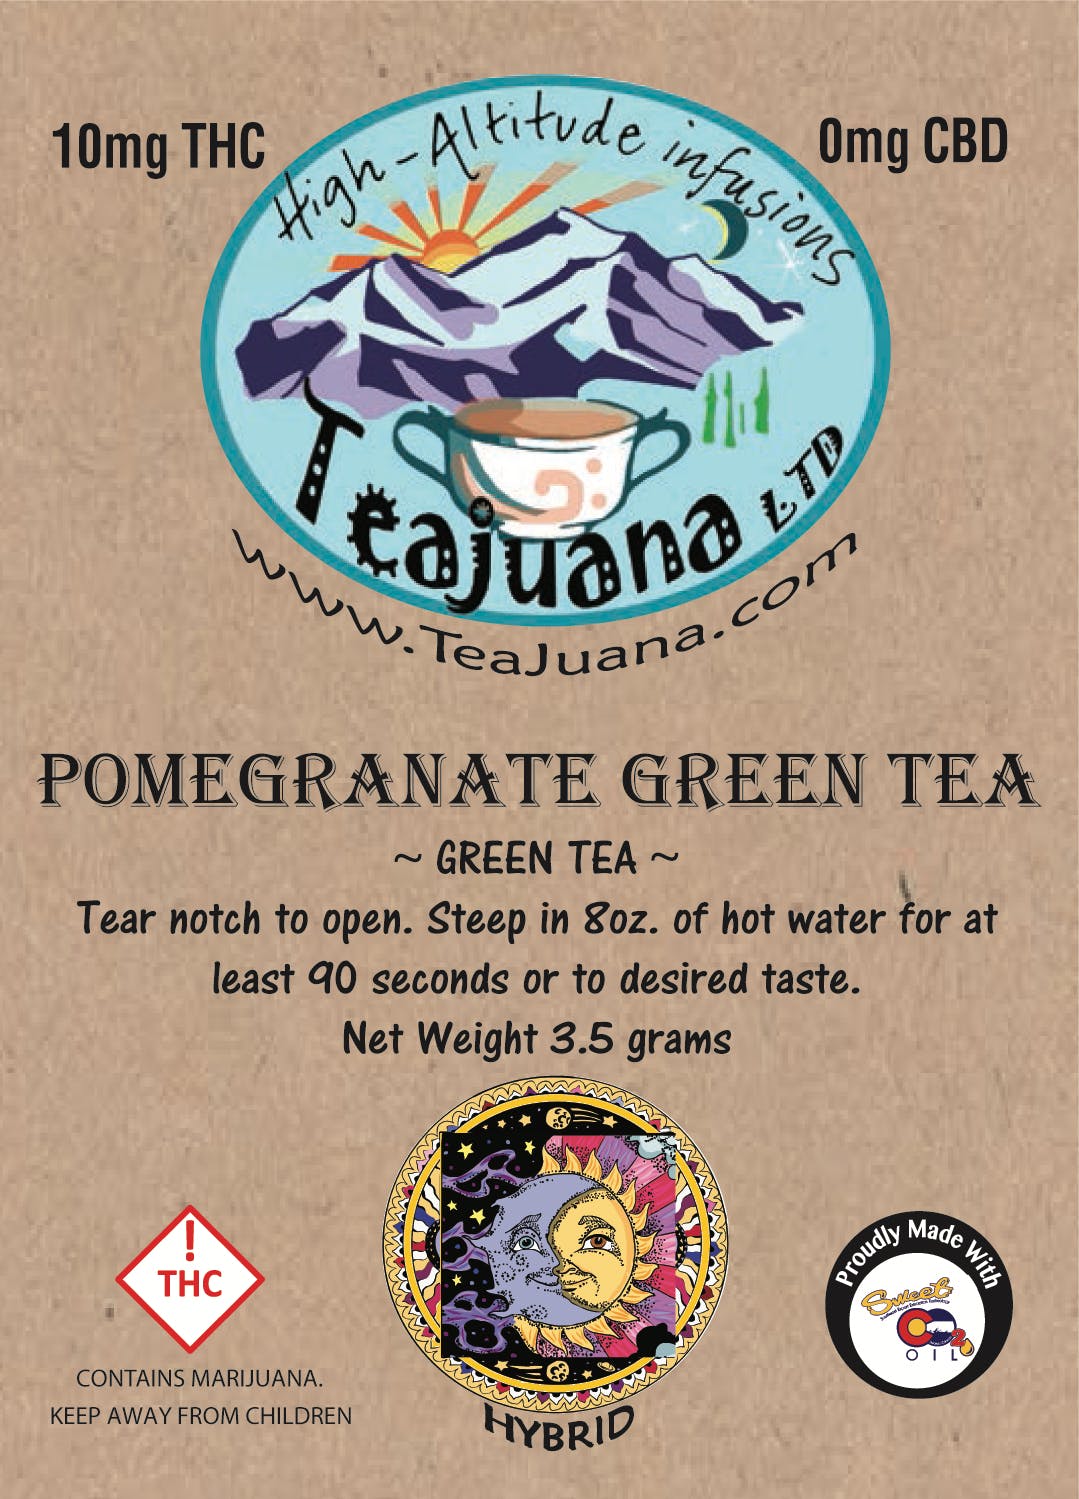 drink-teajuana-pomegranate-green-tea-hybrid-10mg